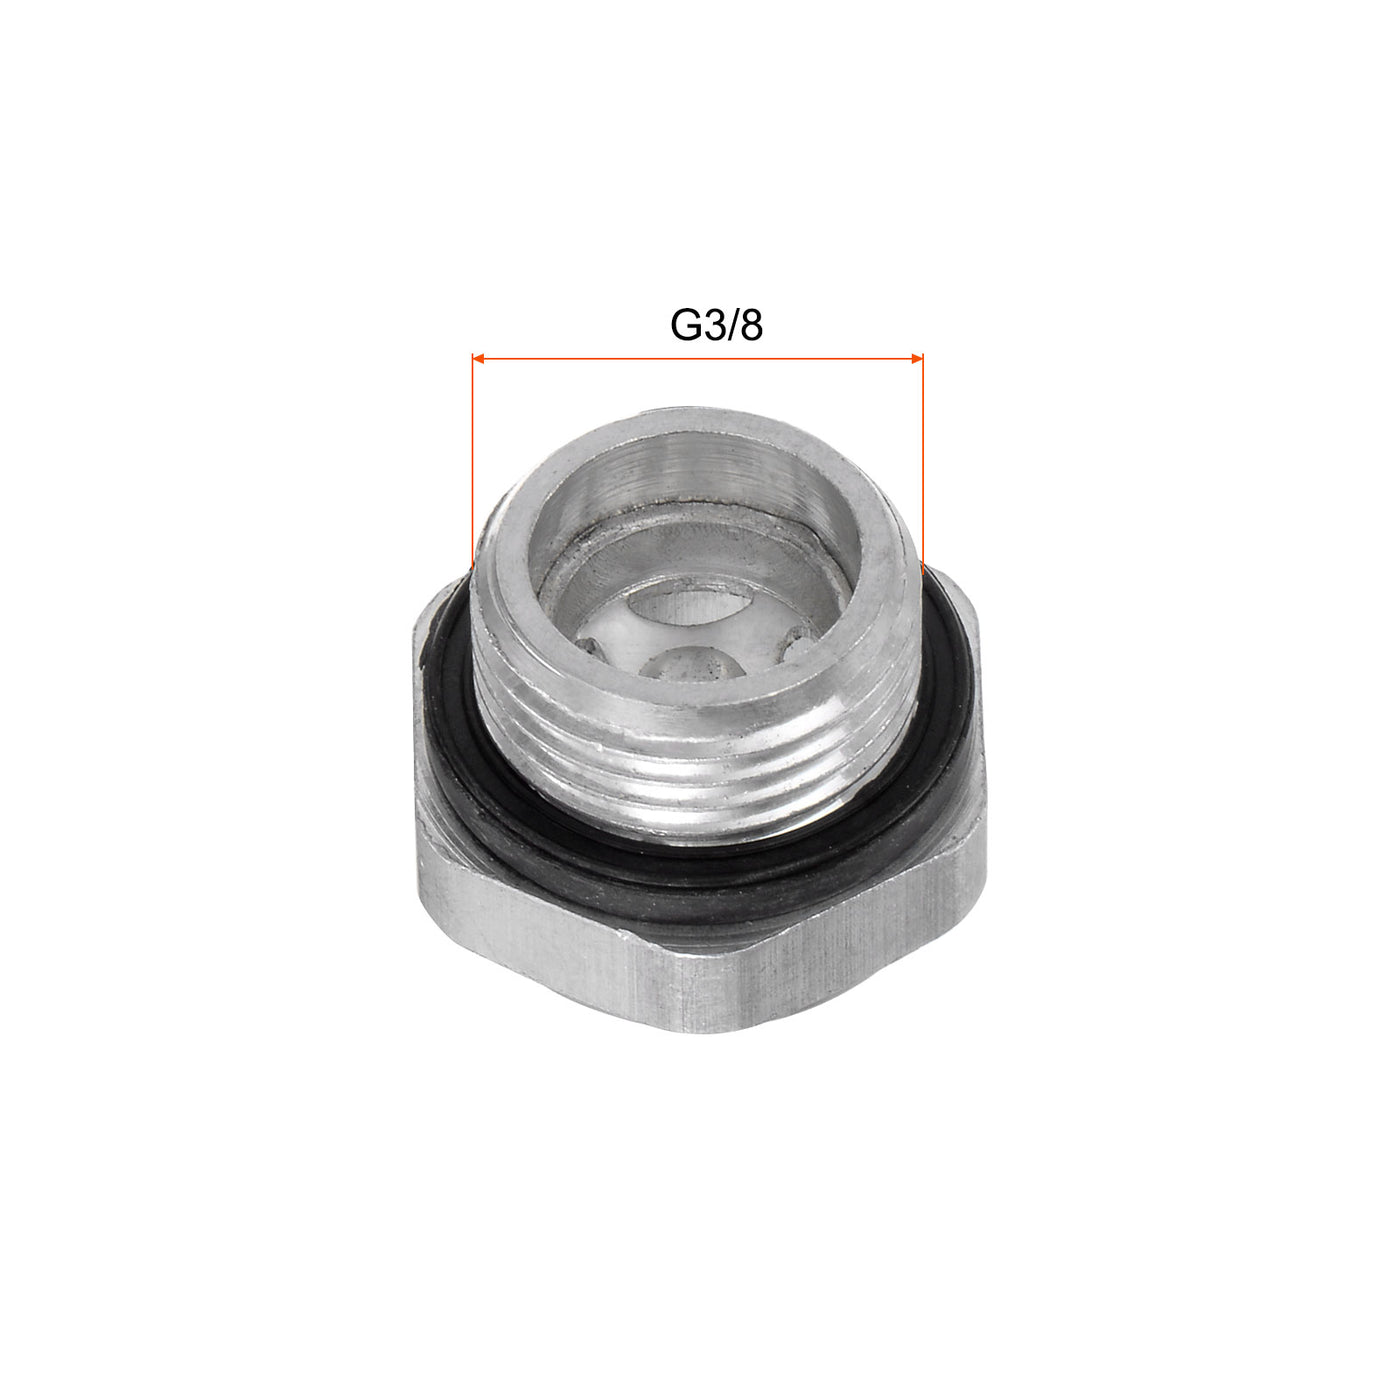 Uxcell Uxcell Air Compressor Oil Level Gauge Sight Glass G1/2" Male Thread Aluminum